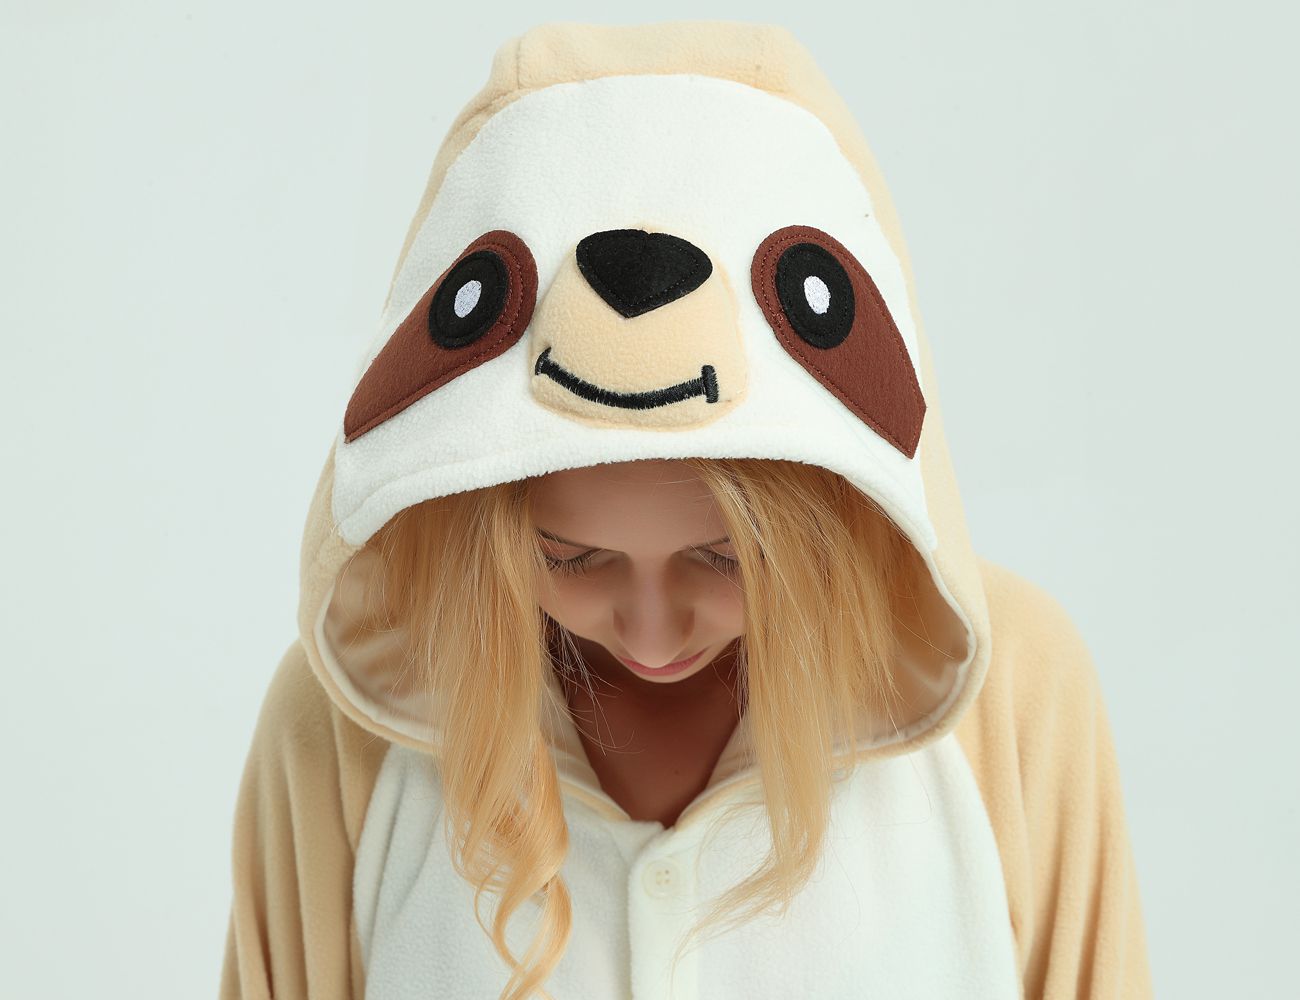 Sloth Animal Onesie Kigurumi Costume For Adults and Teenagers